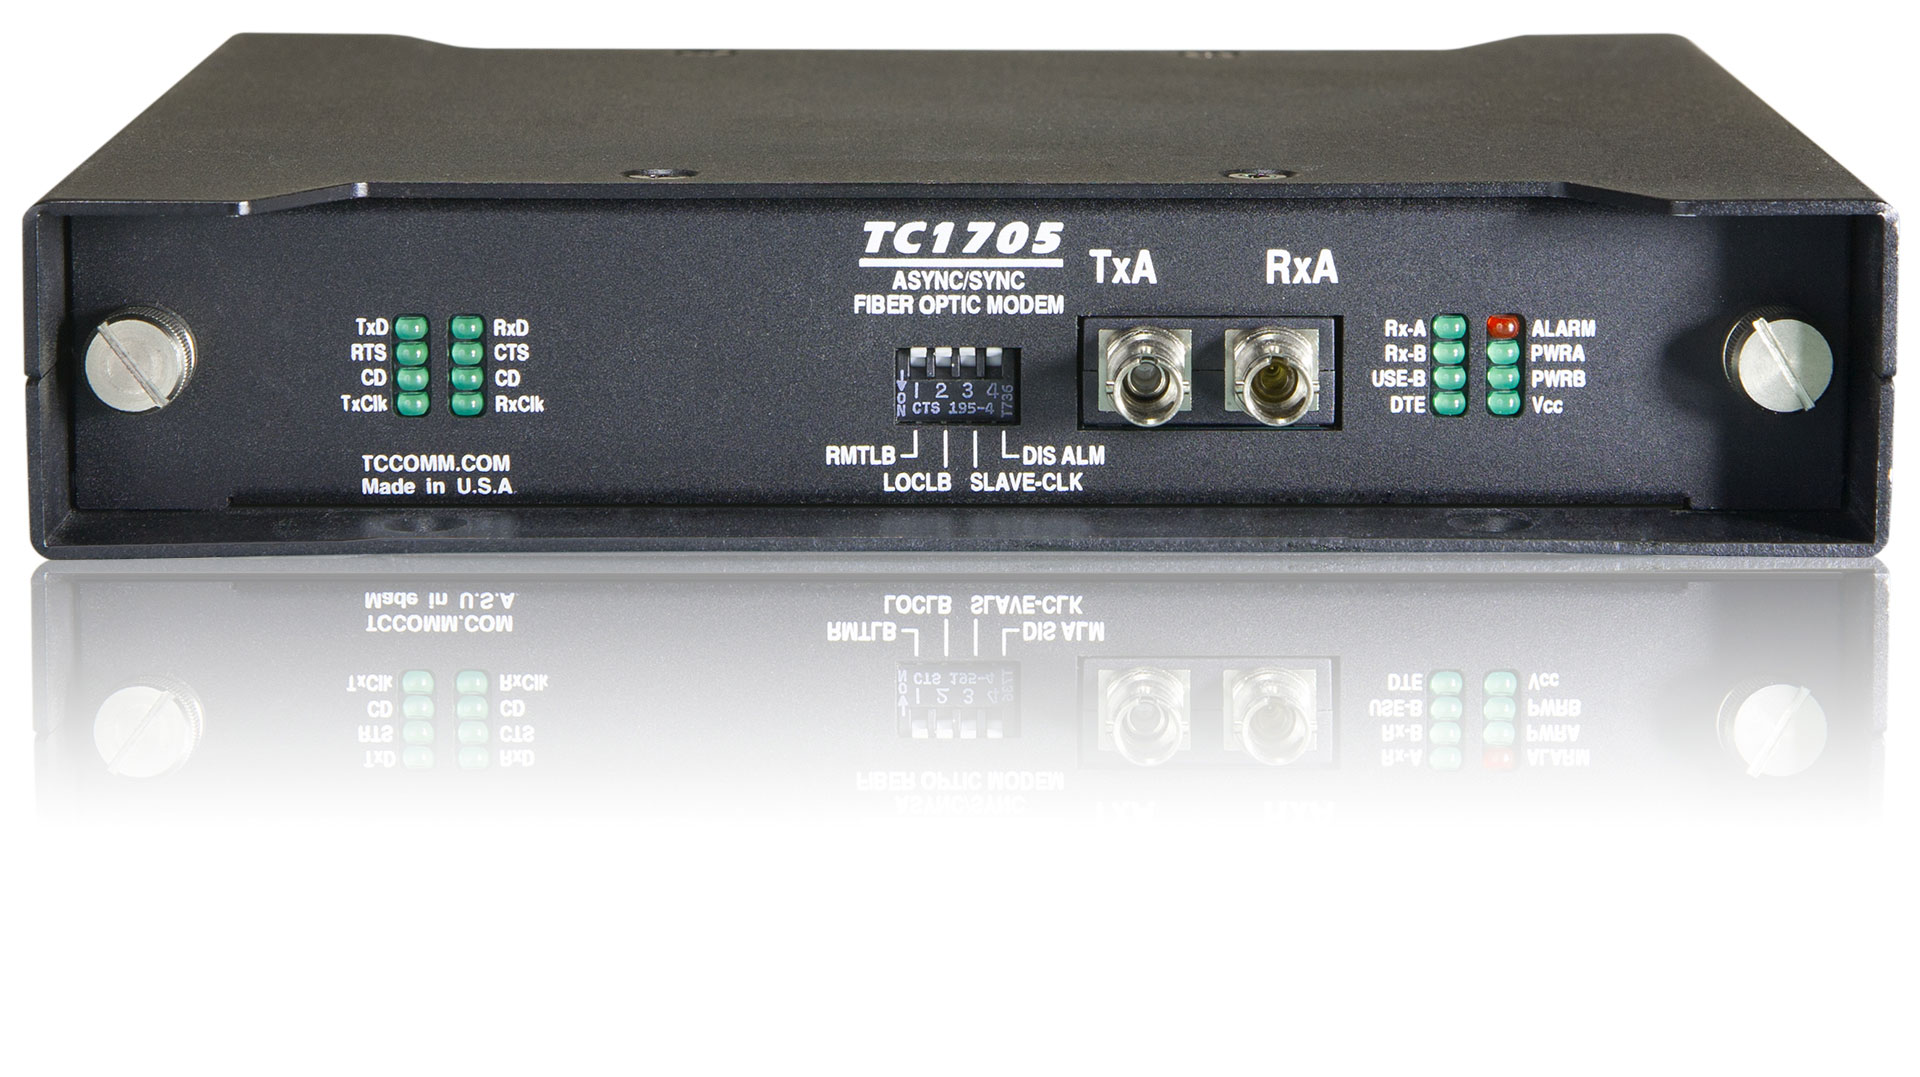 ITU-T Rec. V.90 (09/98) A digital modem and analogue modem pair